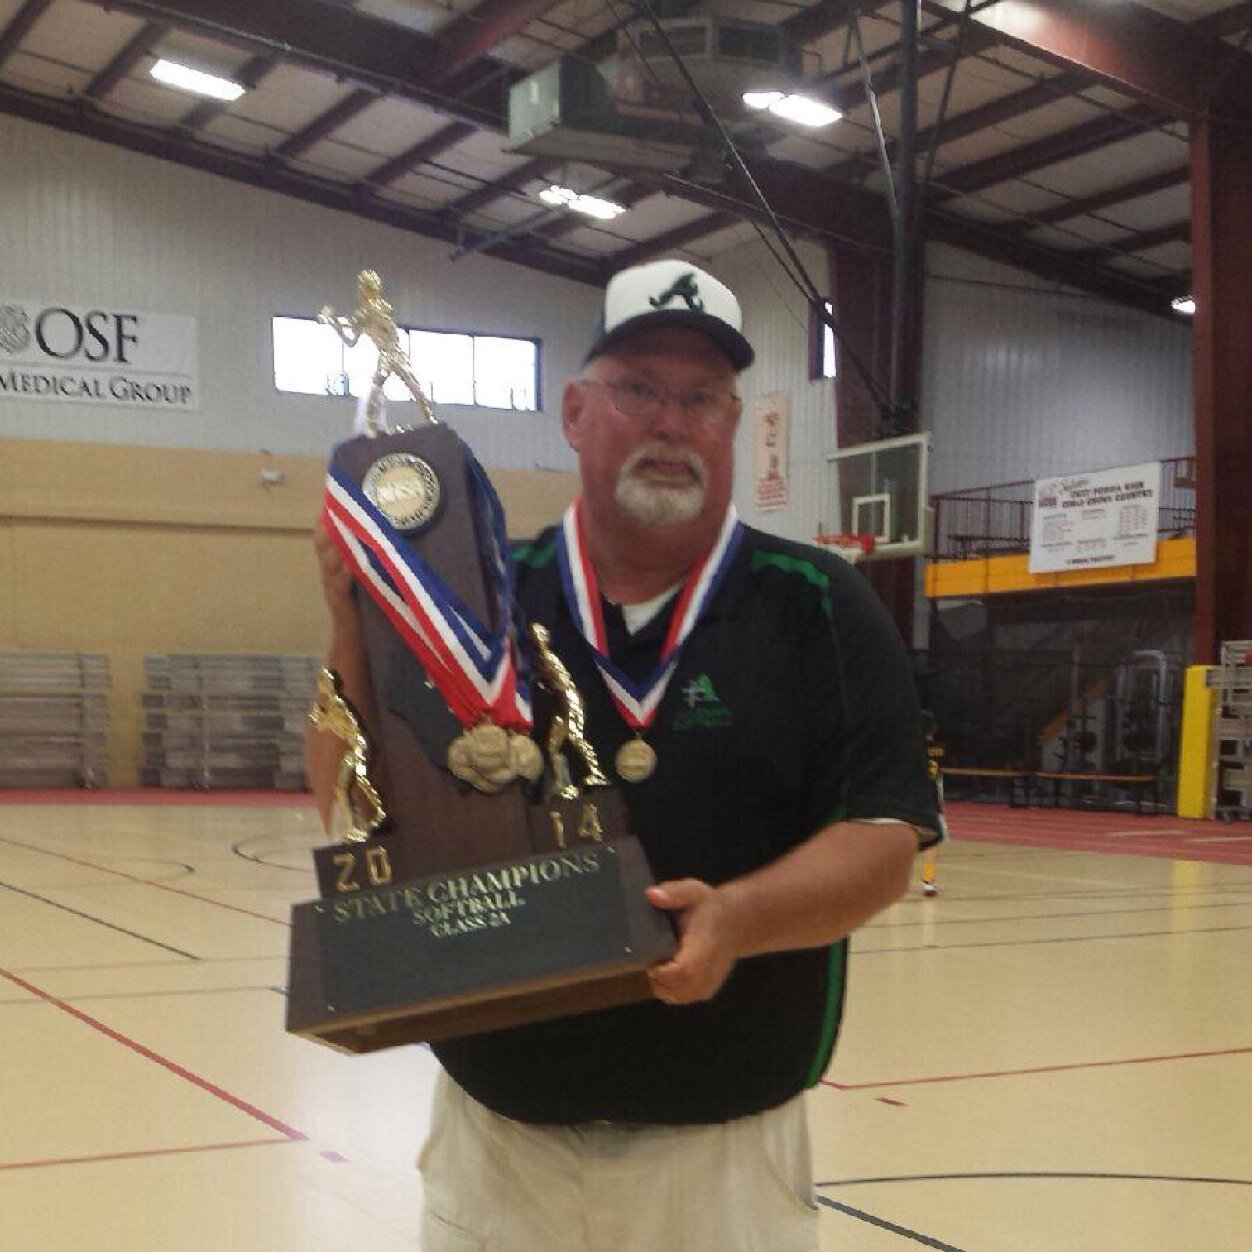 AHS Girls Basketball asst. Coach. Retired Softball Coach after 32 years. 2014 State Champion!!!